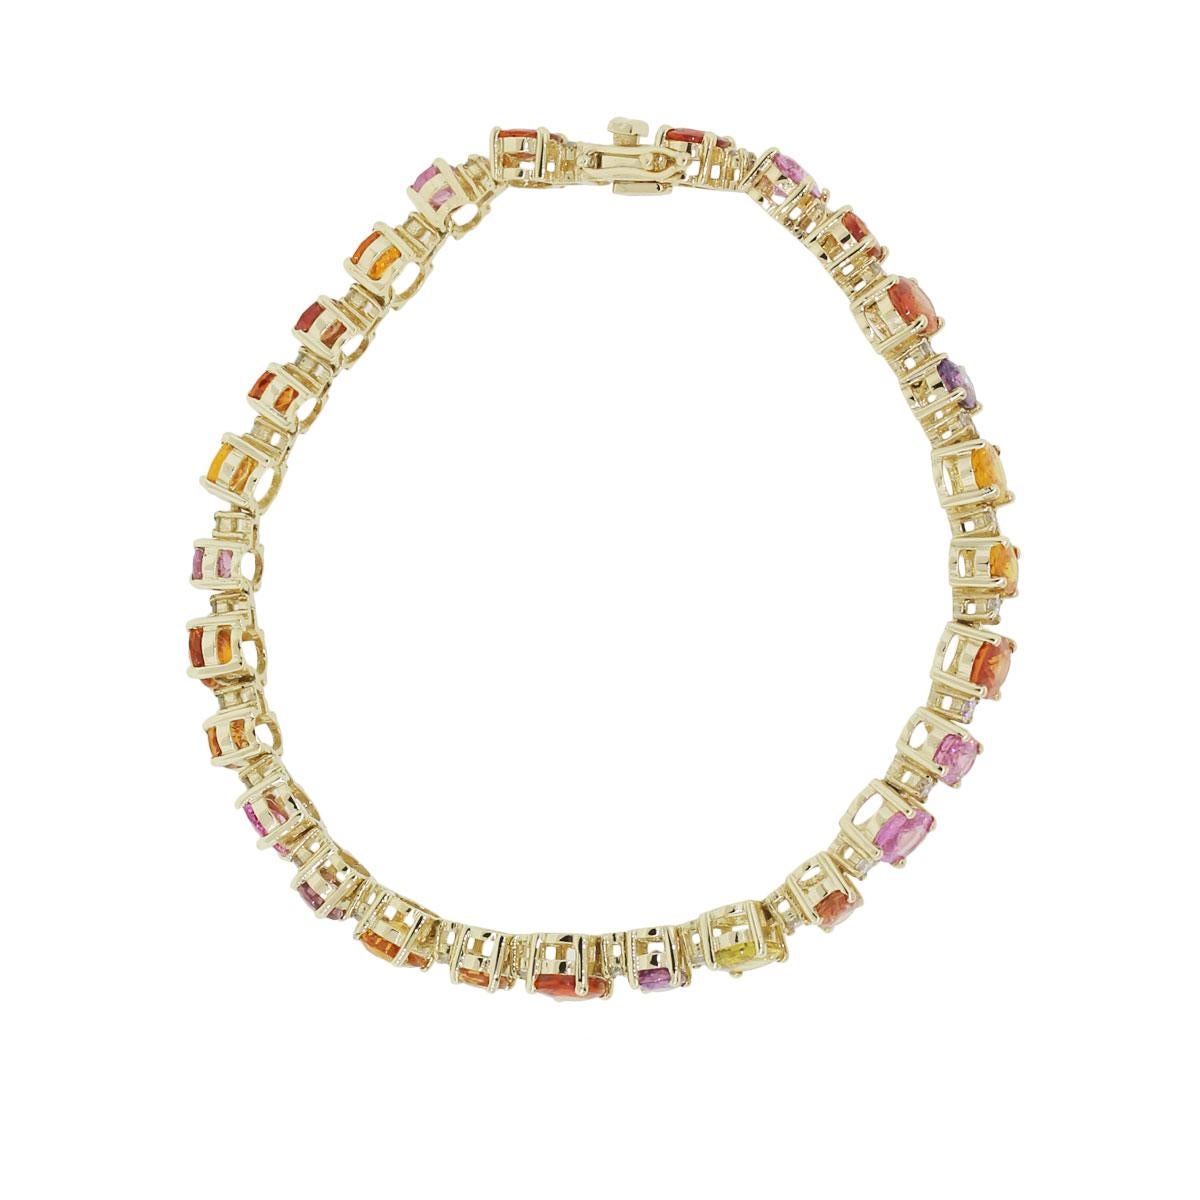 Oval Cut Multi-Color Sapphires and Diamond Bracelet